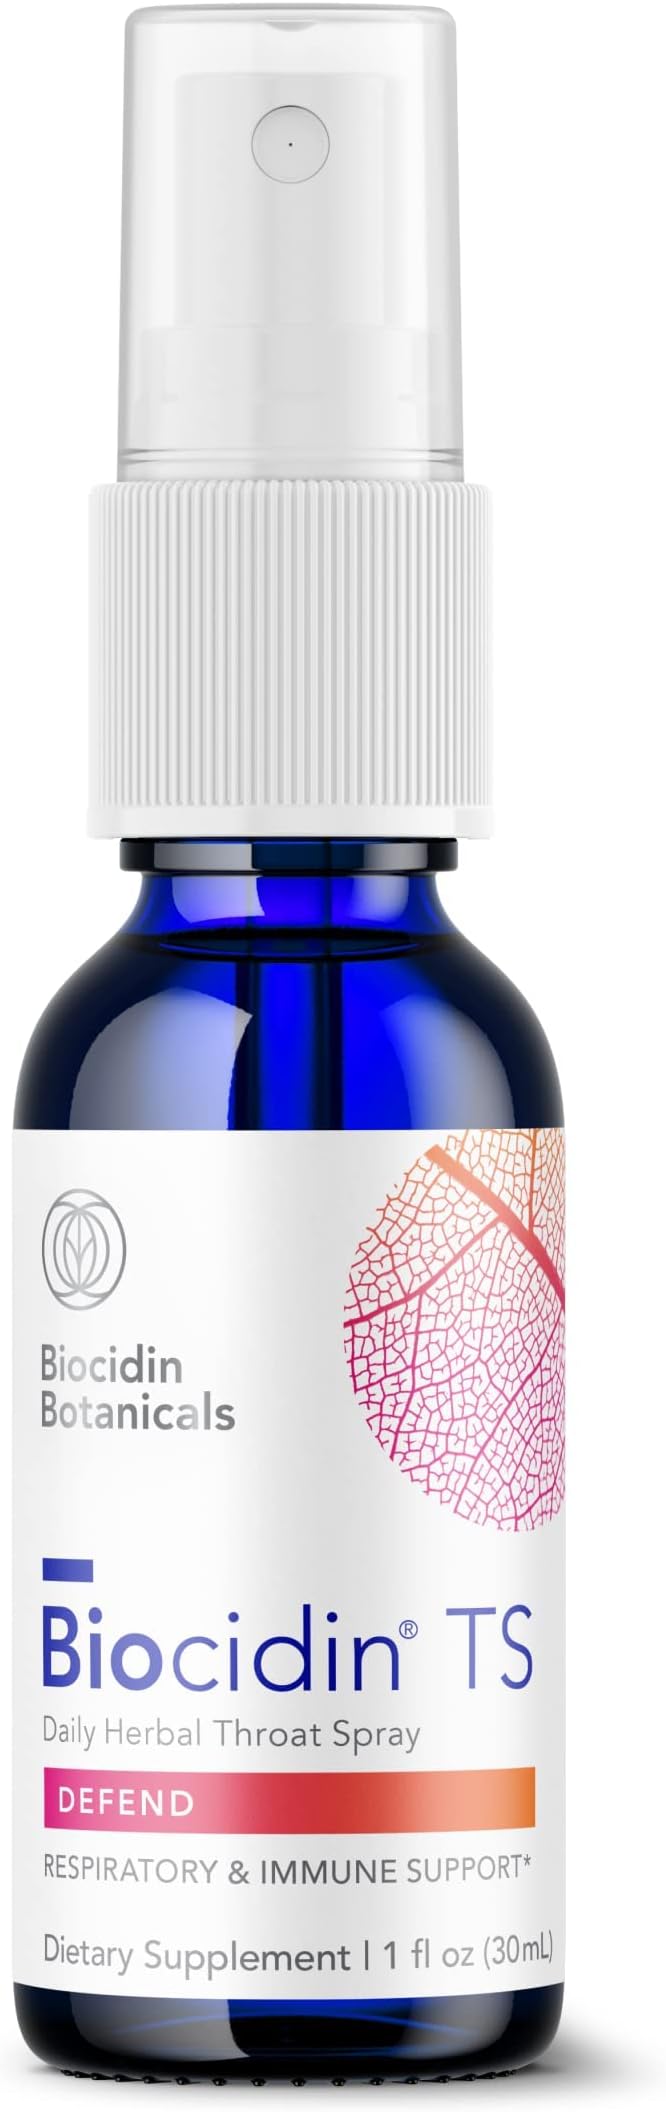 Biocidin TS Defend Herbal Throat Spray Daily Immune Support 1 fl oz